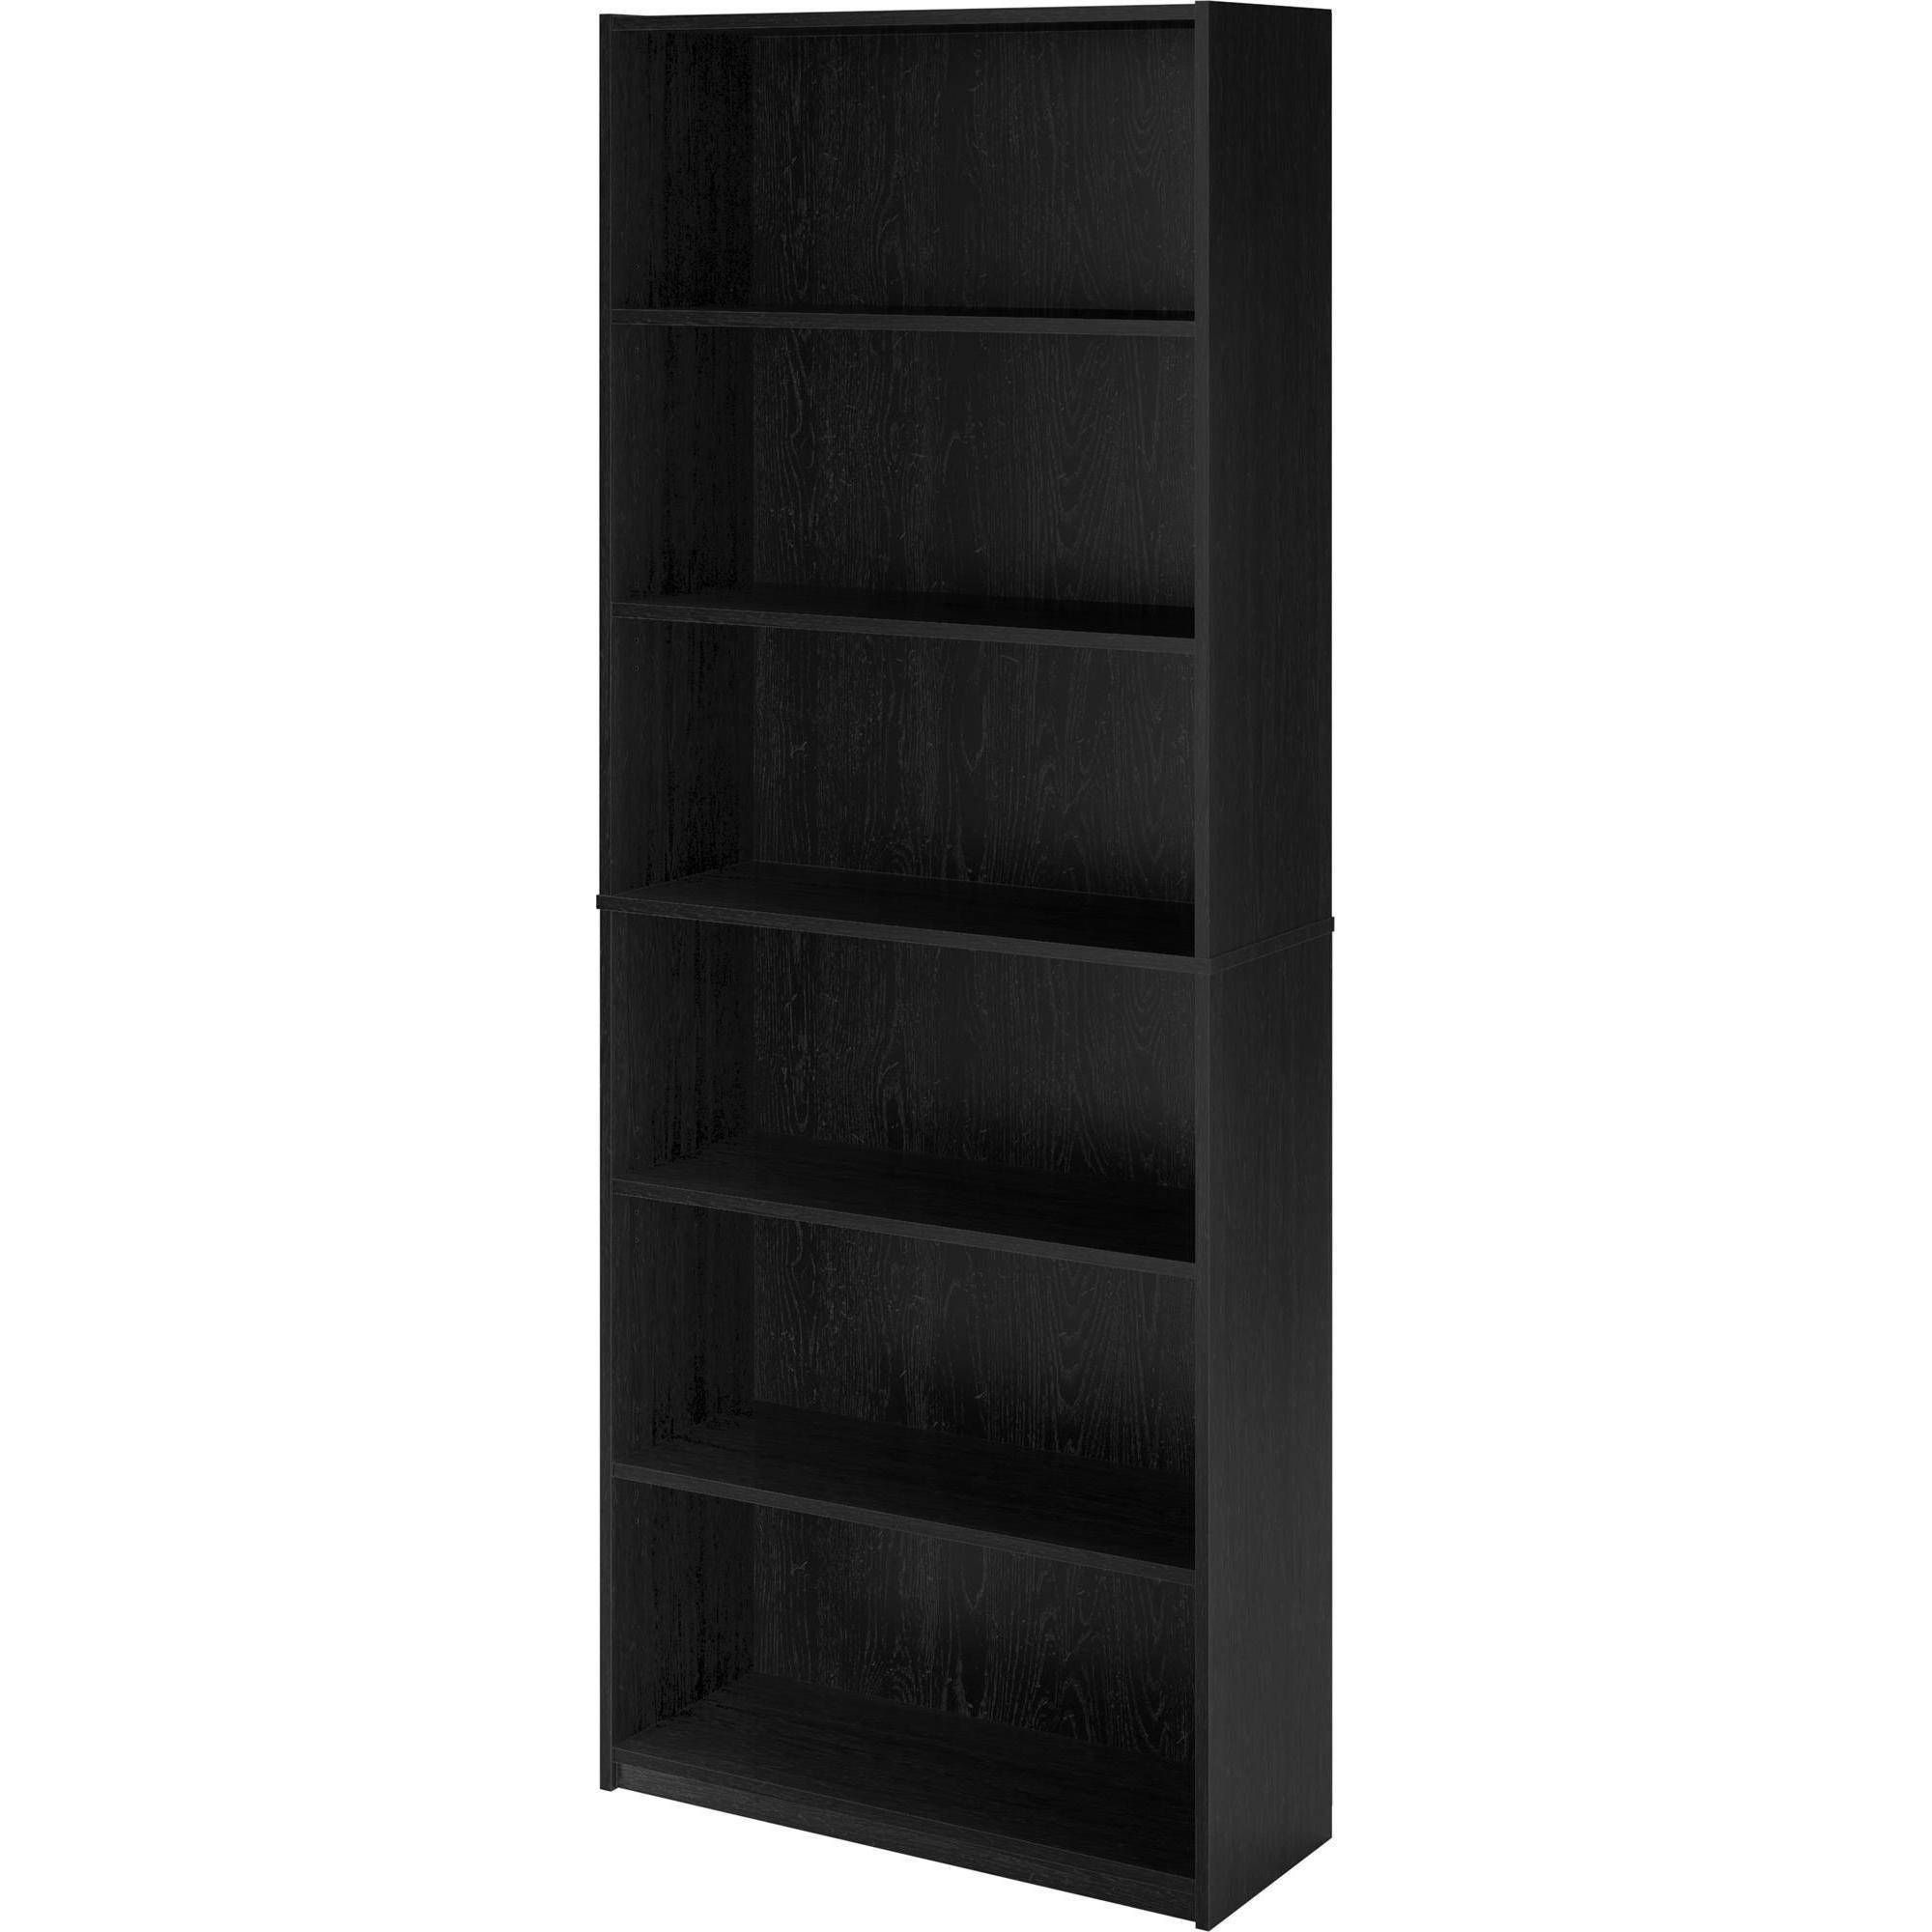 6 Shelf Bookcases Inside Most Current Mainstays 6 Shelf Bookcase, Black Ebony Ash – Walmart (View 2 of 15)